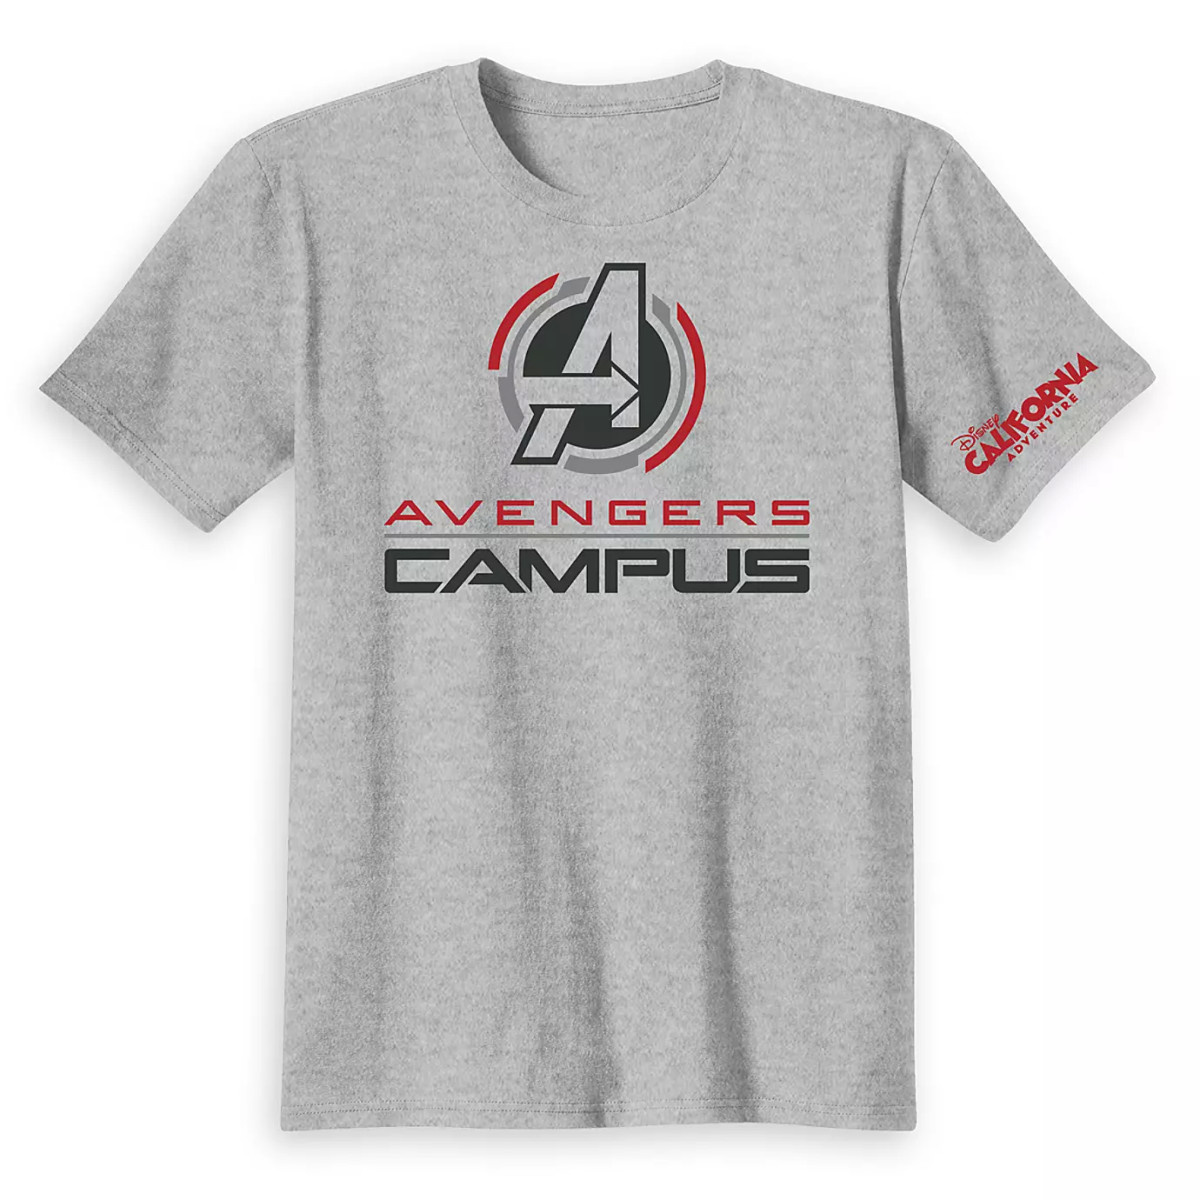 Avengers Campus Shirt